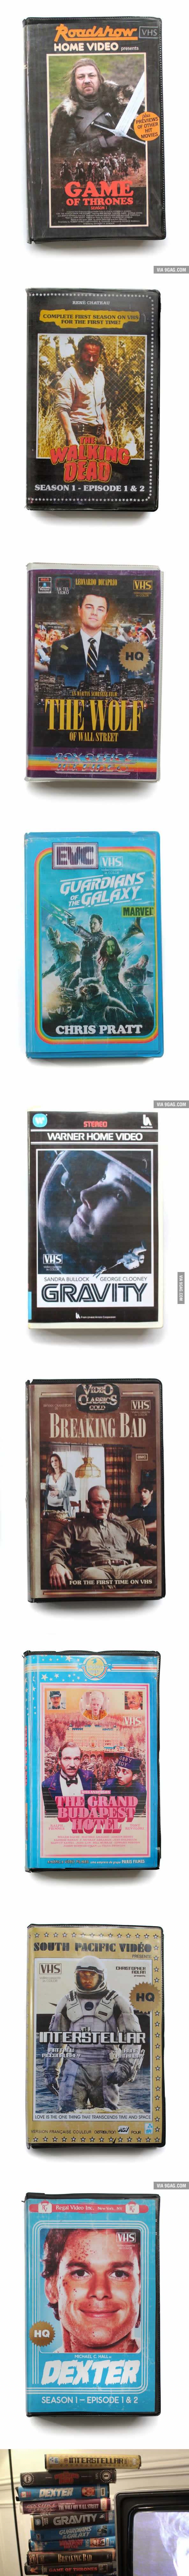 VHS Serie